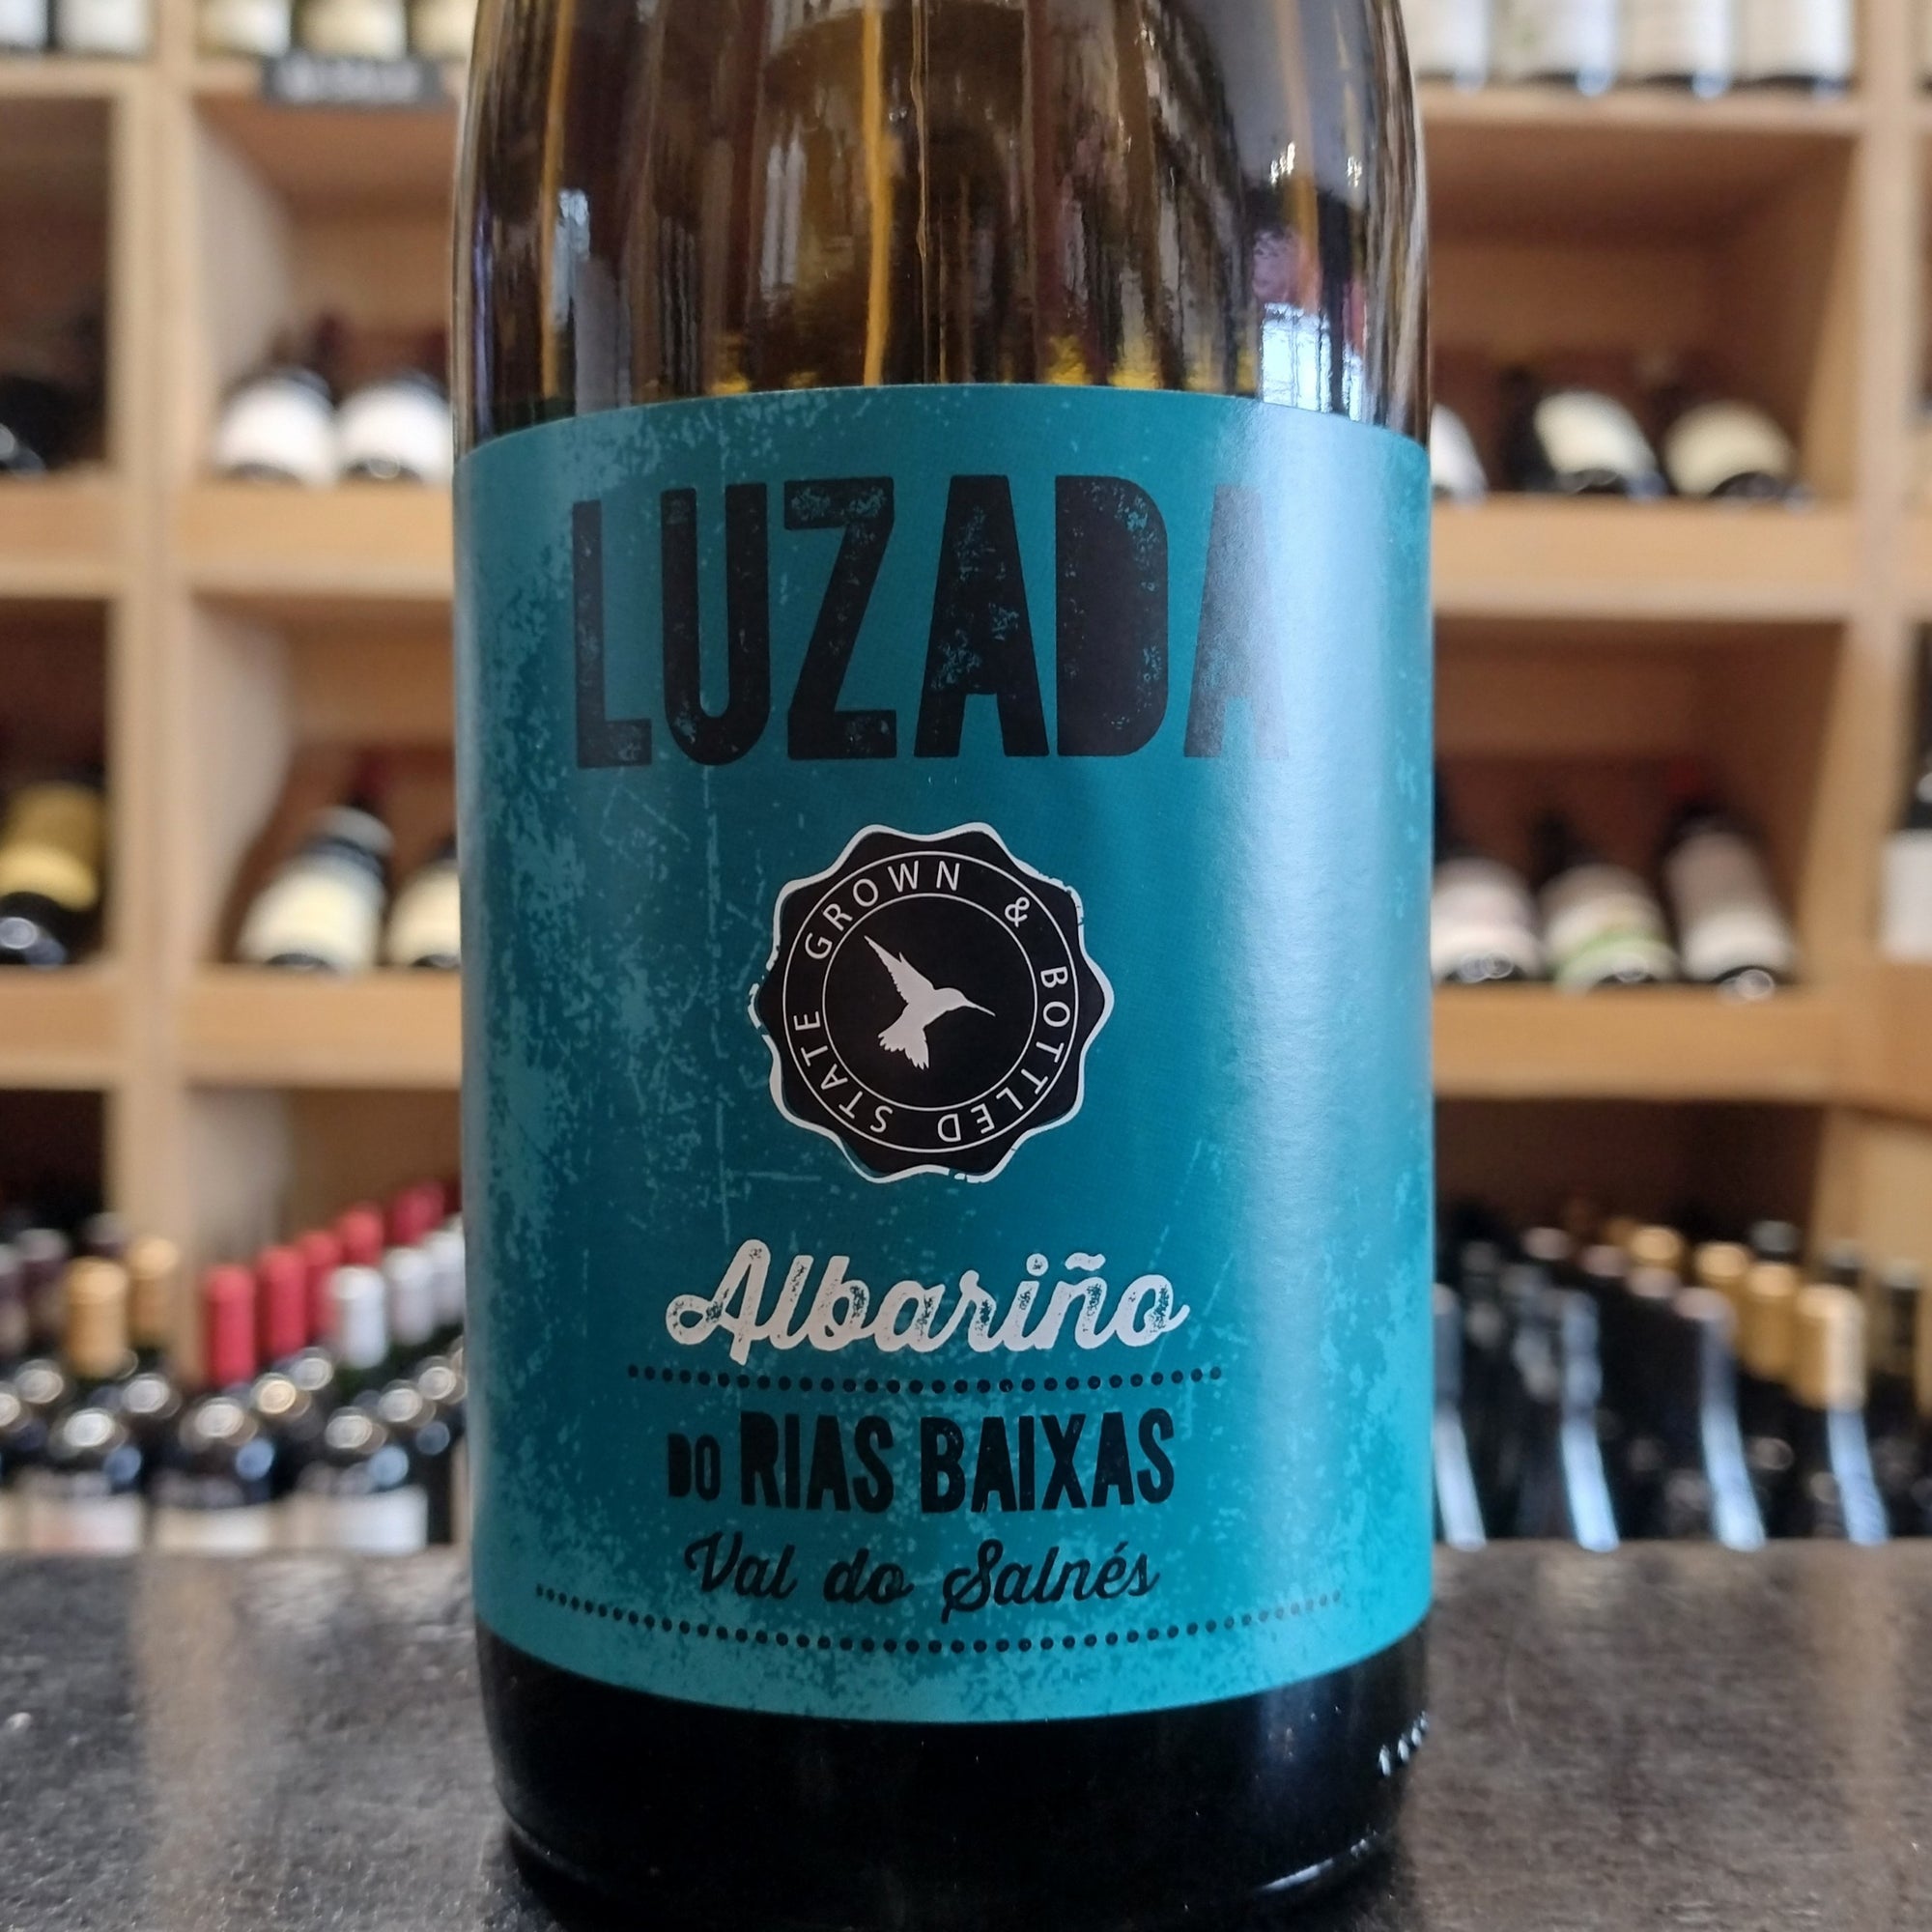 Arousana Luzada Albarino 2022 - Butler's Wine Cellar Brighton